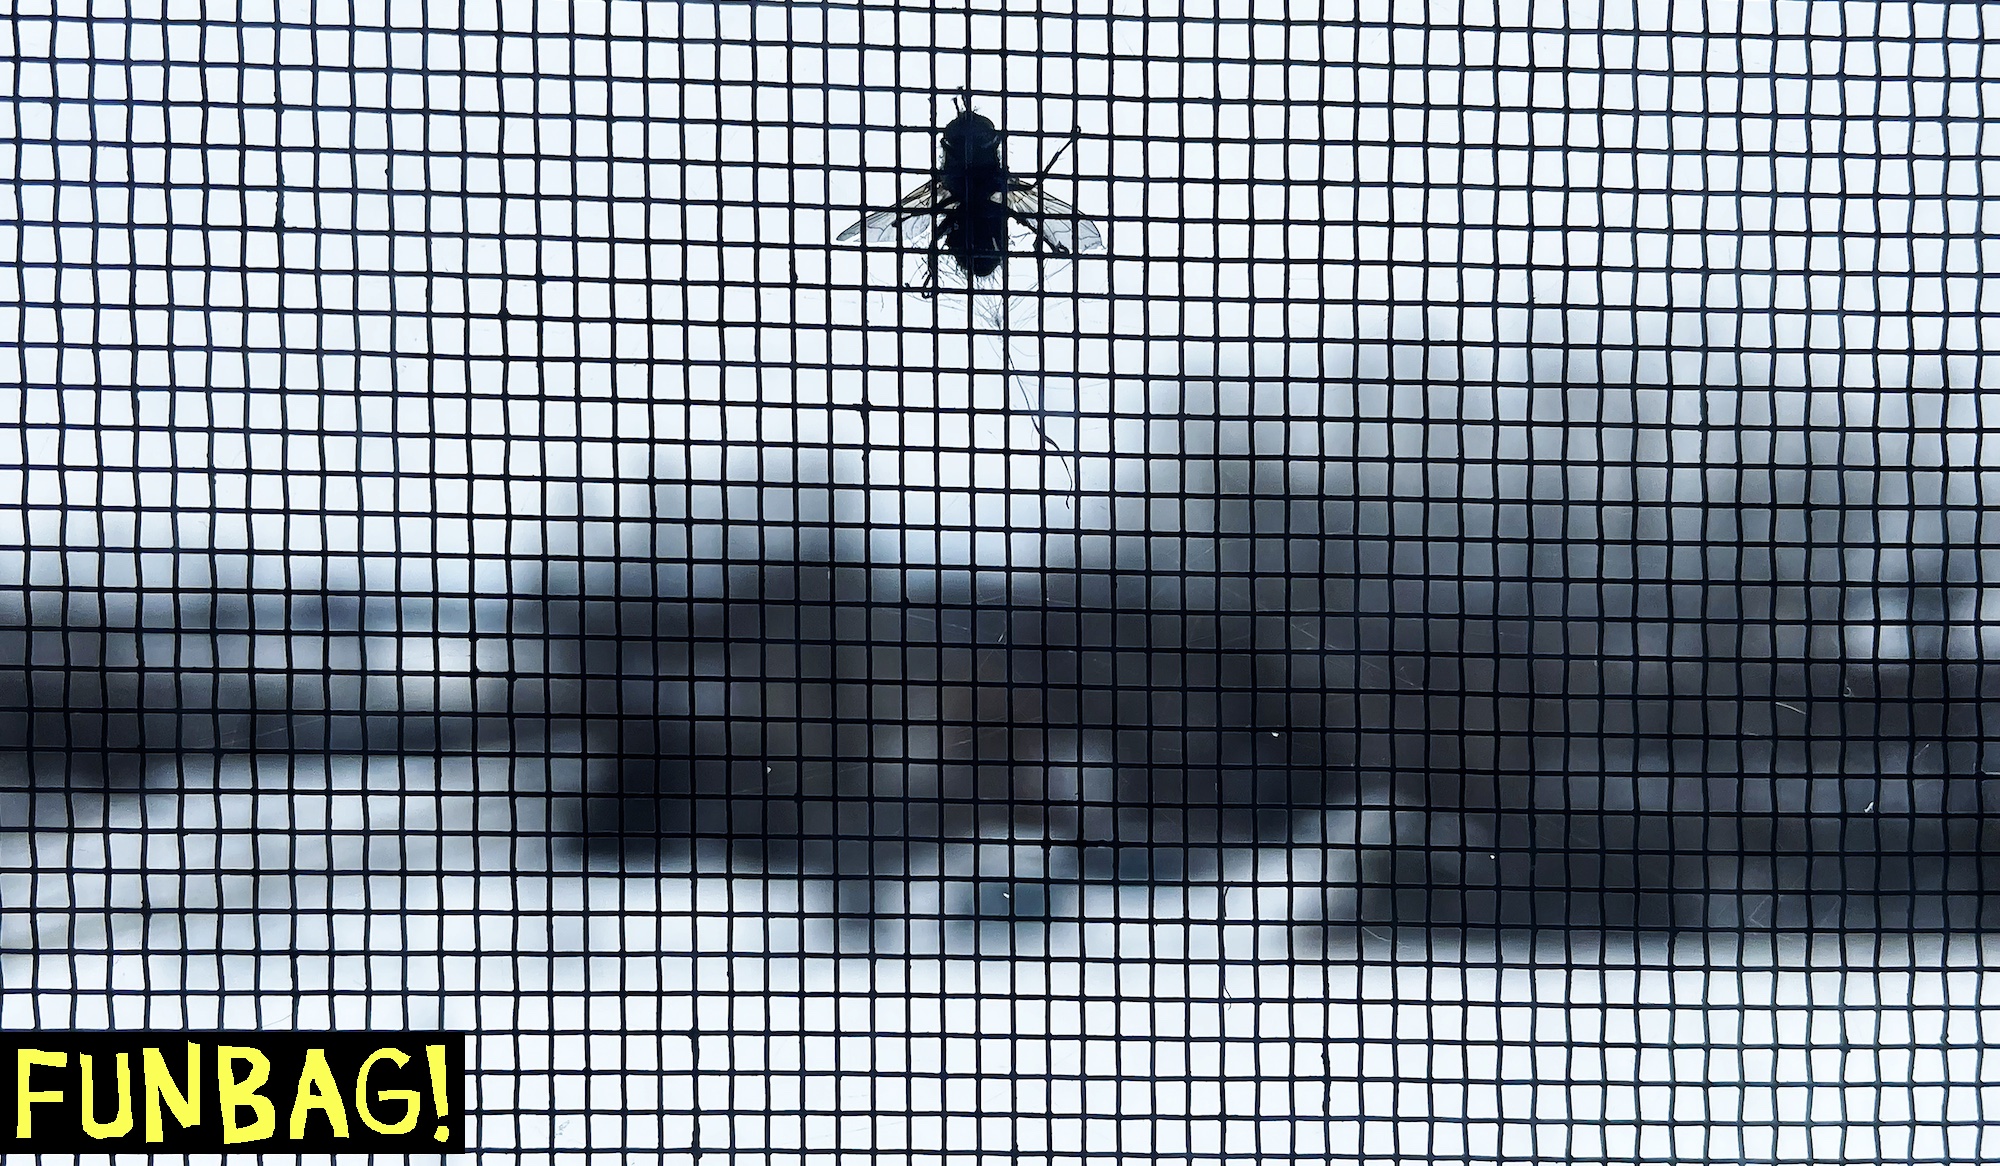 Green Bay, WI - December 18: A frozen fly on a window screen in a Green Bay hotel. (Photo by Stan Grossfeld/The Boston Globe via Getty Images)